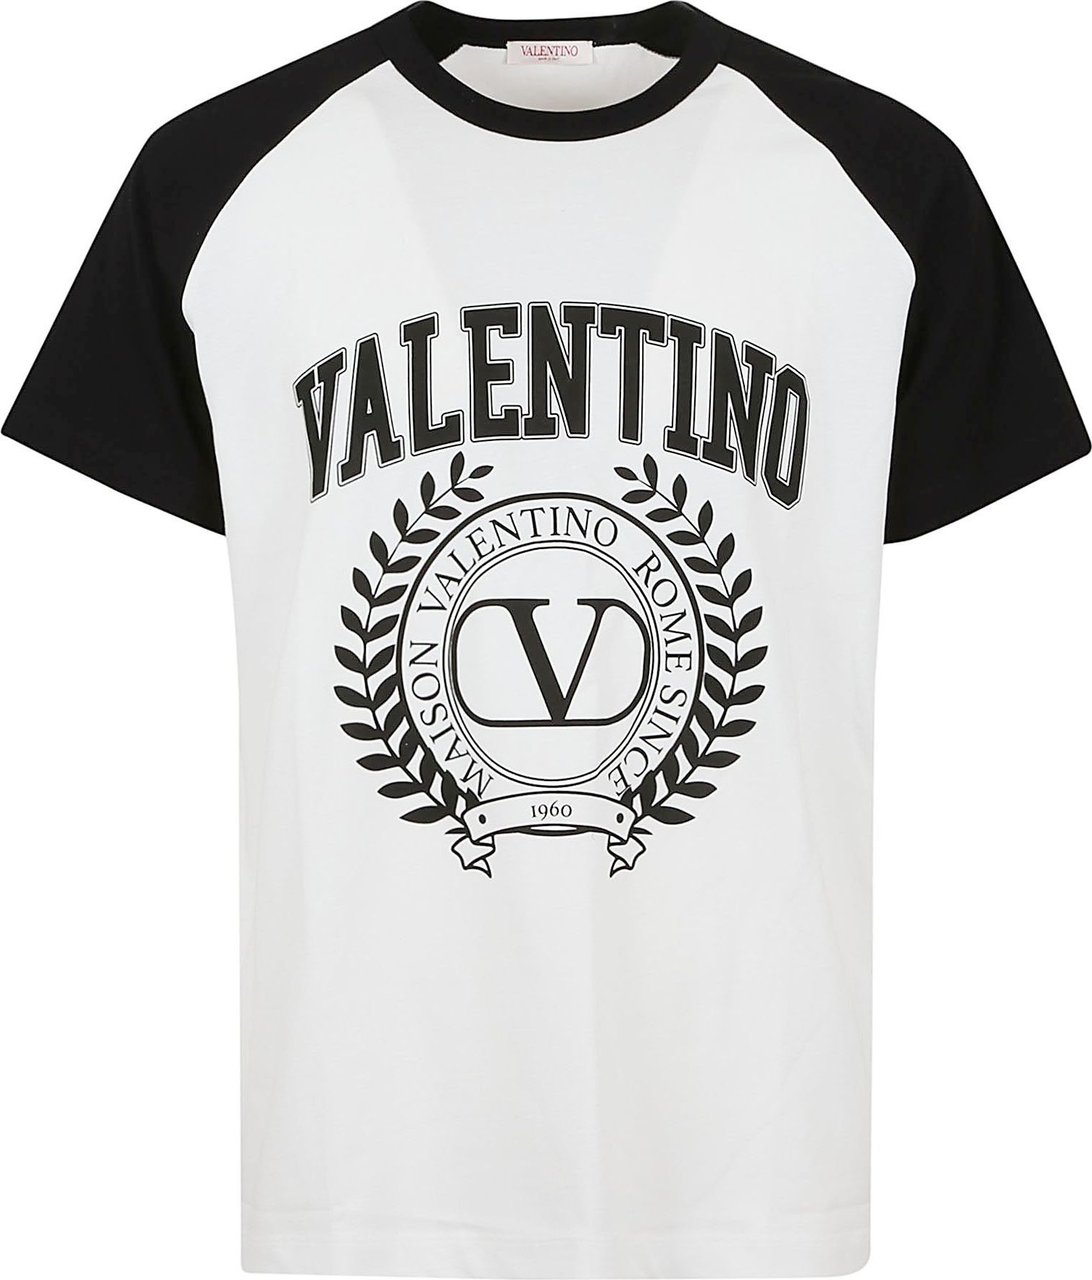 Valentino tshirt maison valentino Wit